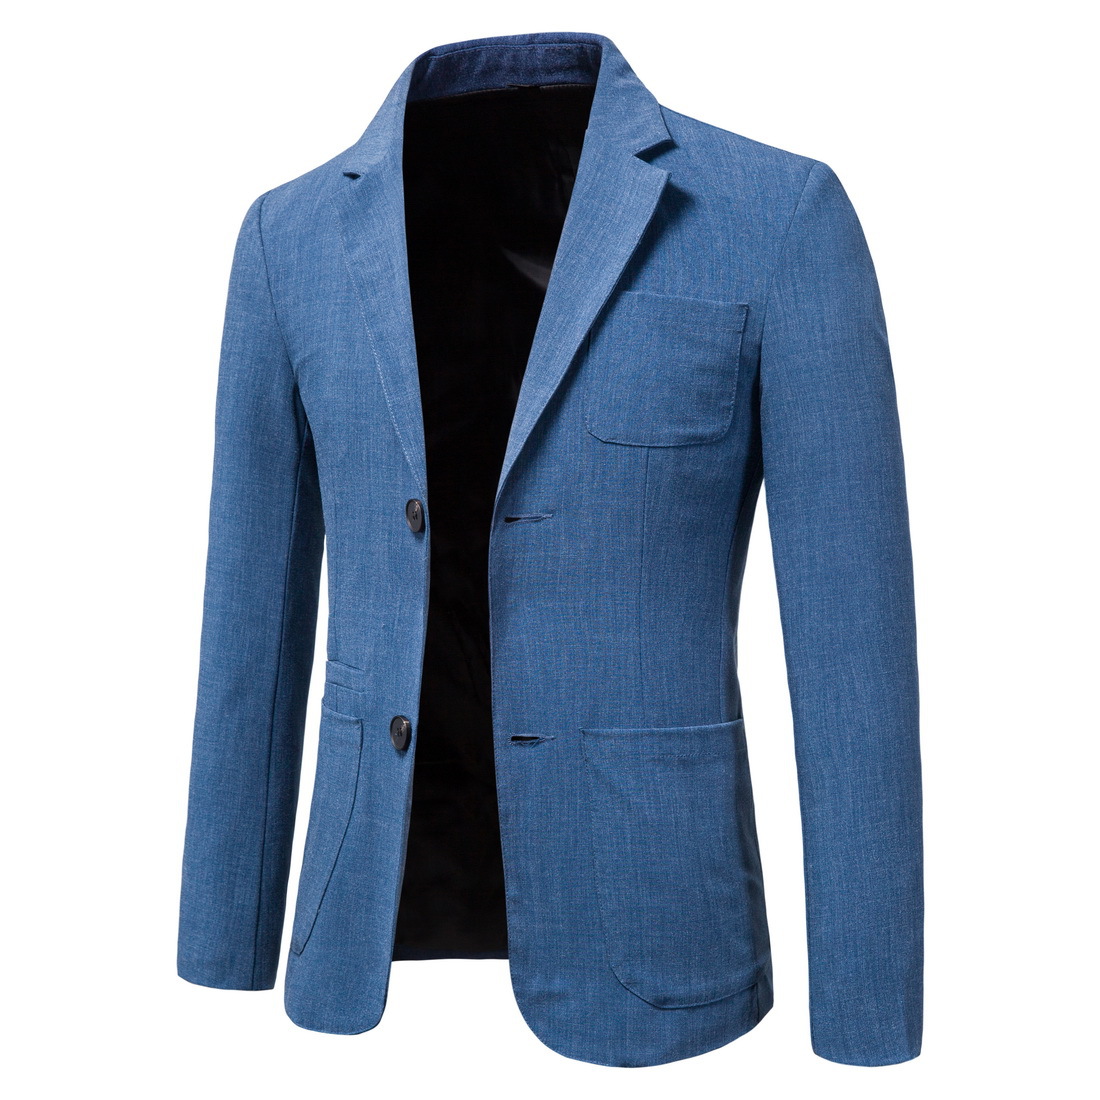 Men Suit Jacket Casual Business Fashion Large Size Two Buttons Jacket Suit Jacket Clothing Blazer Slim Fit